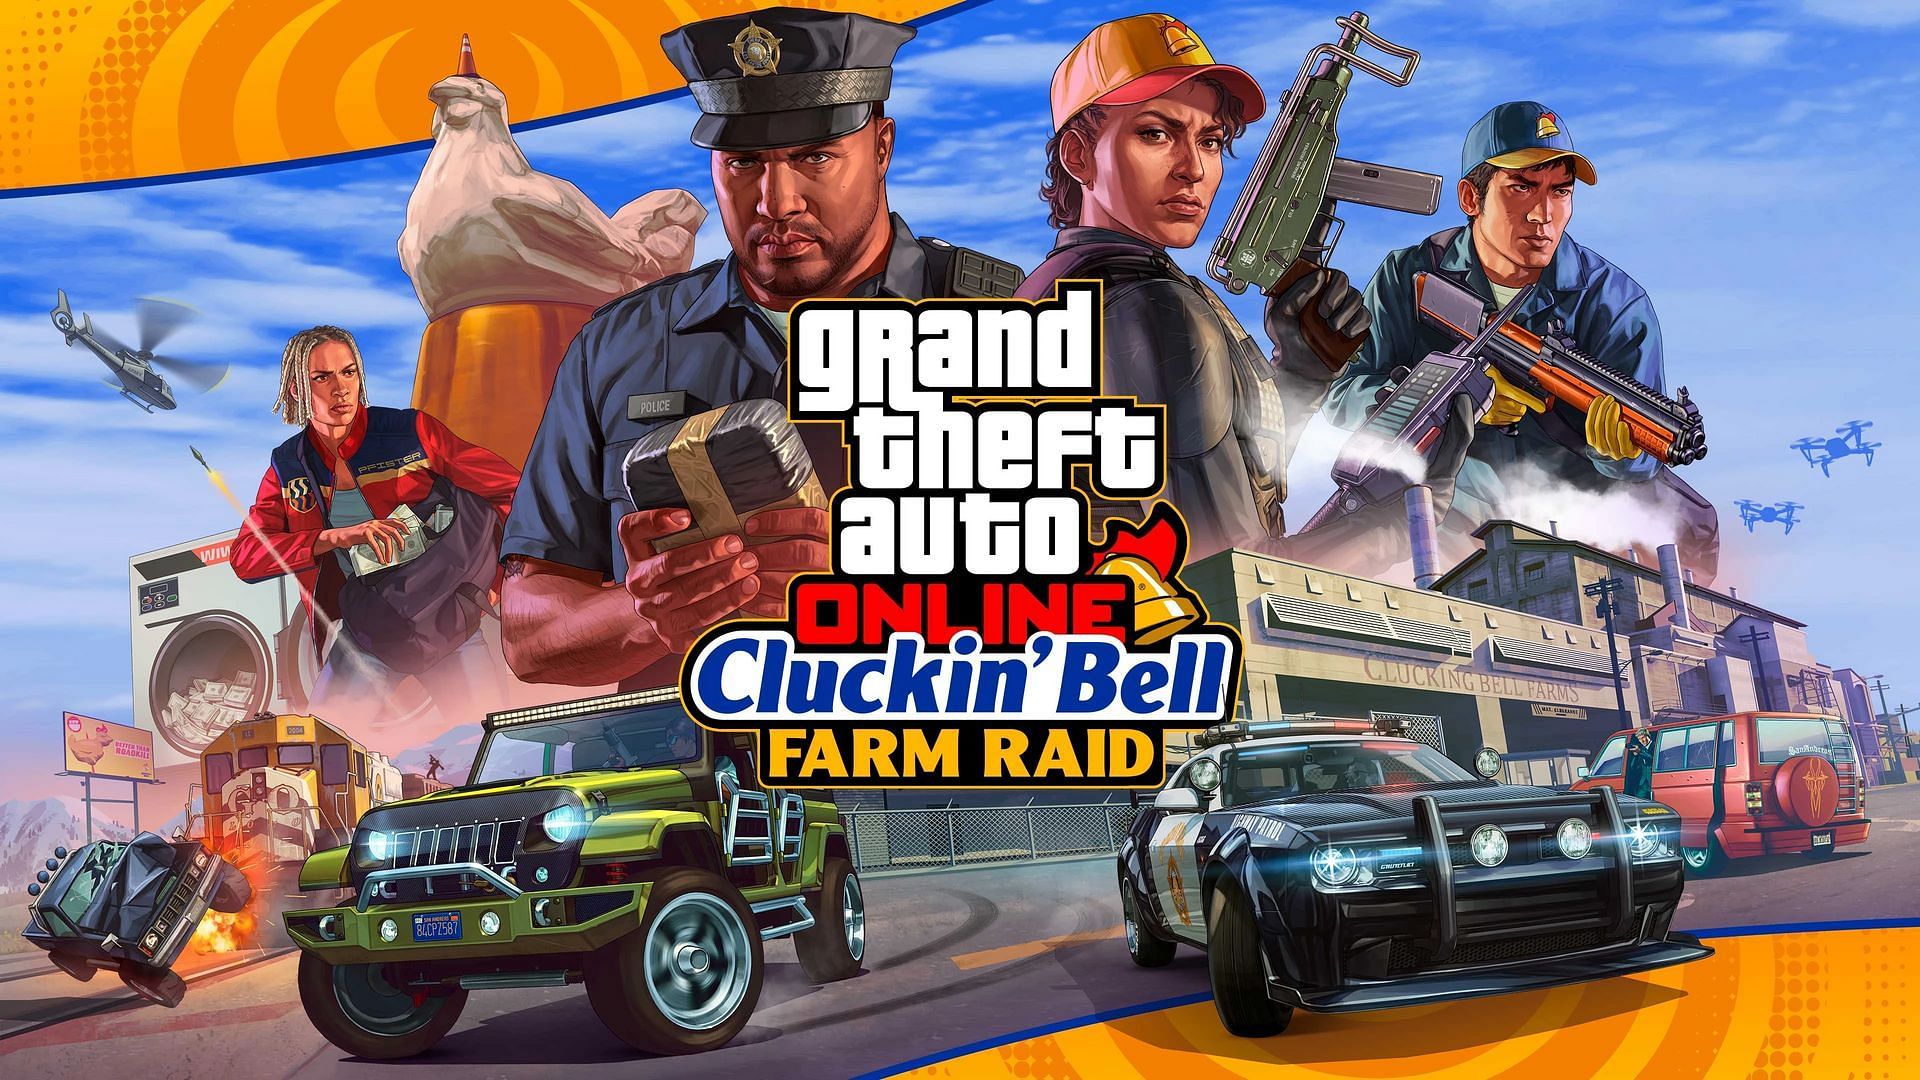 Cluckin Bell Farm Raid is a great way to make money (Image via Rockstar Games)